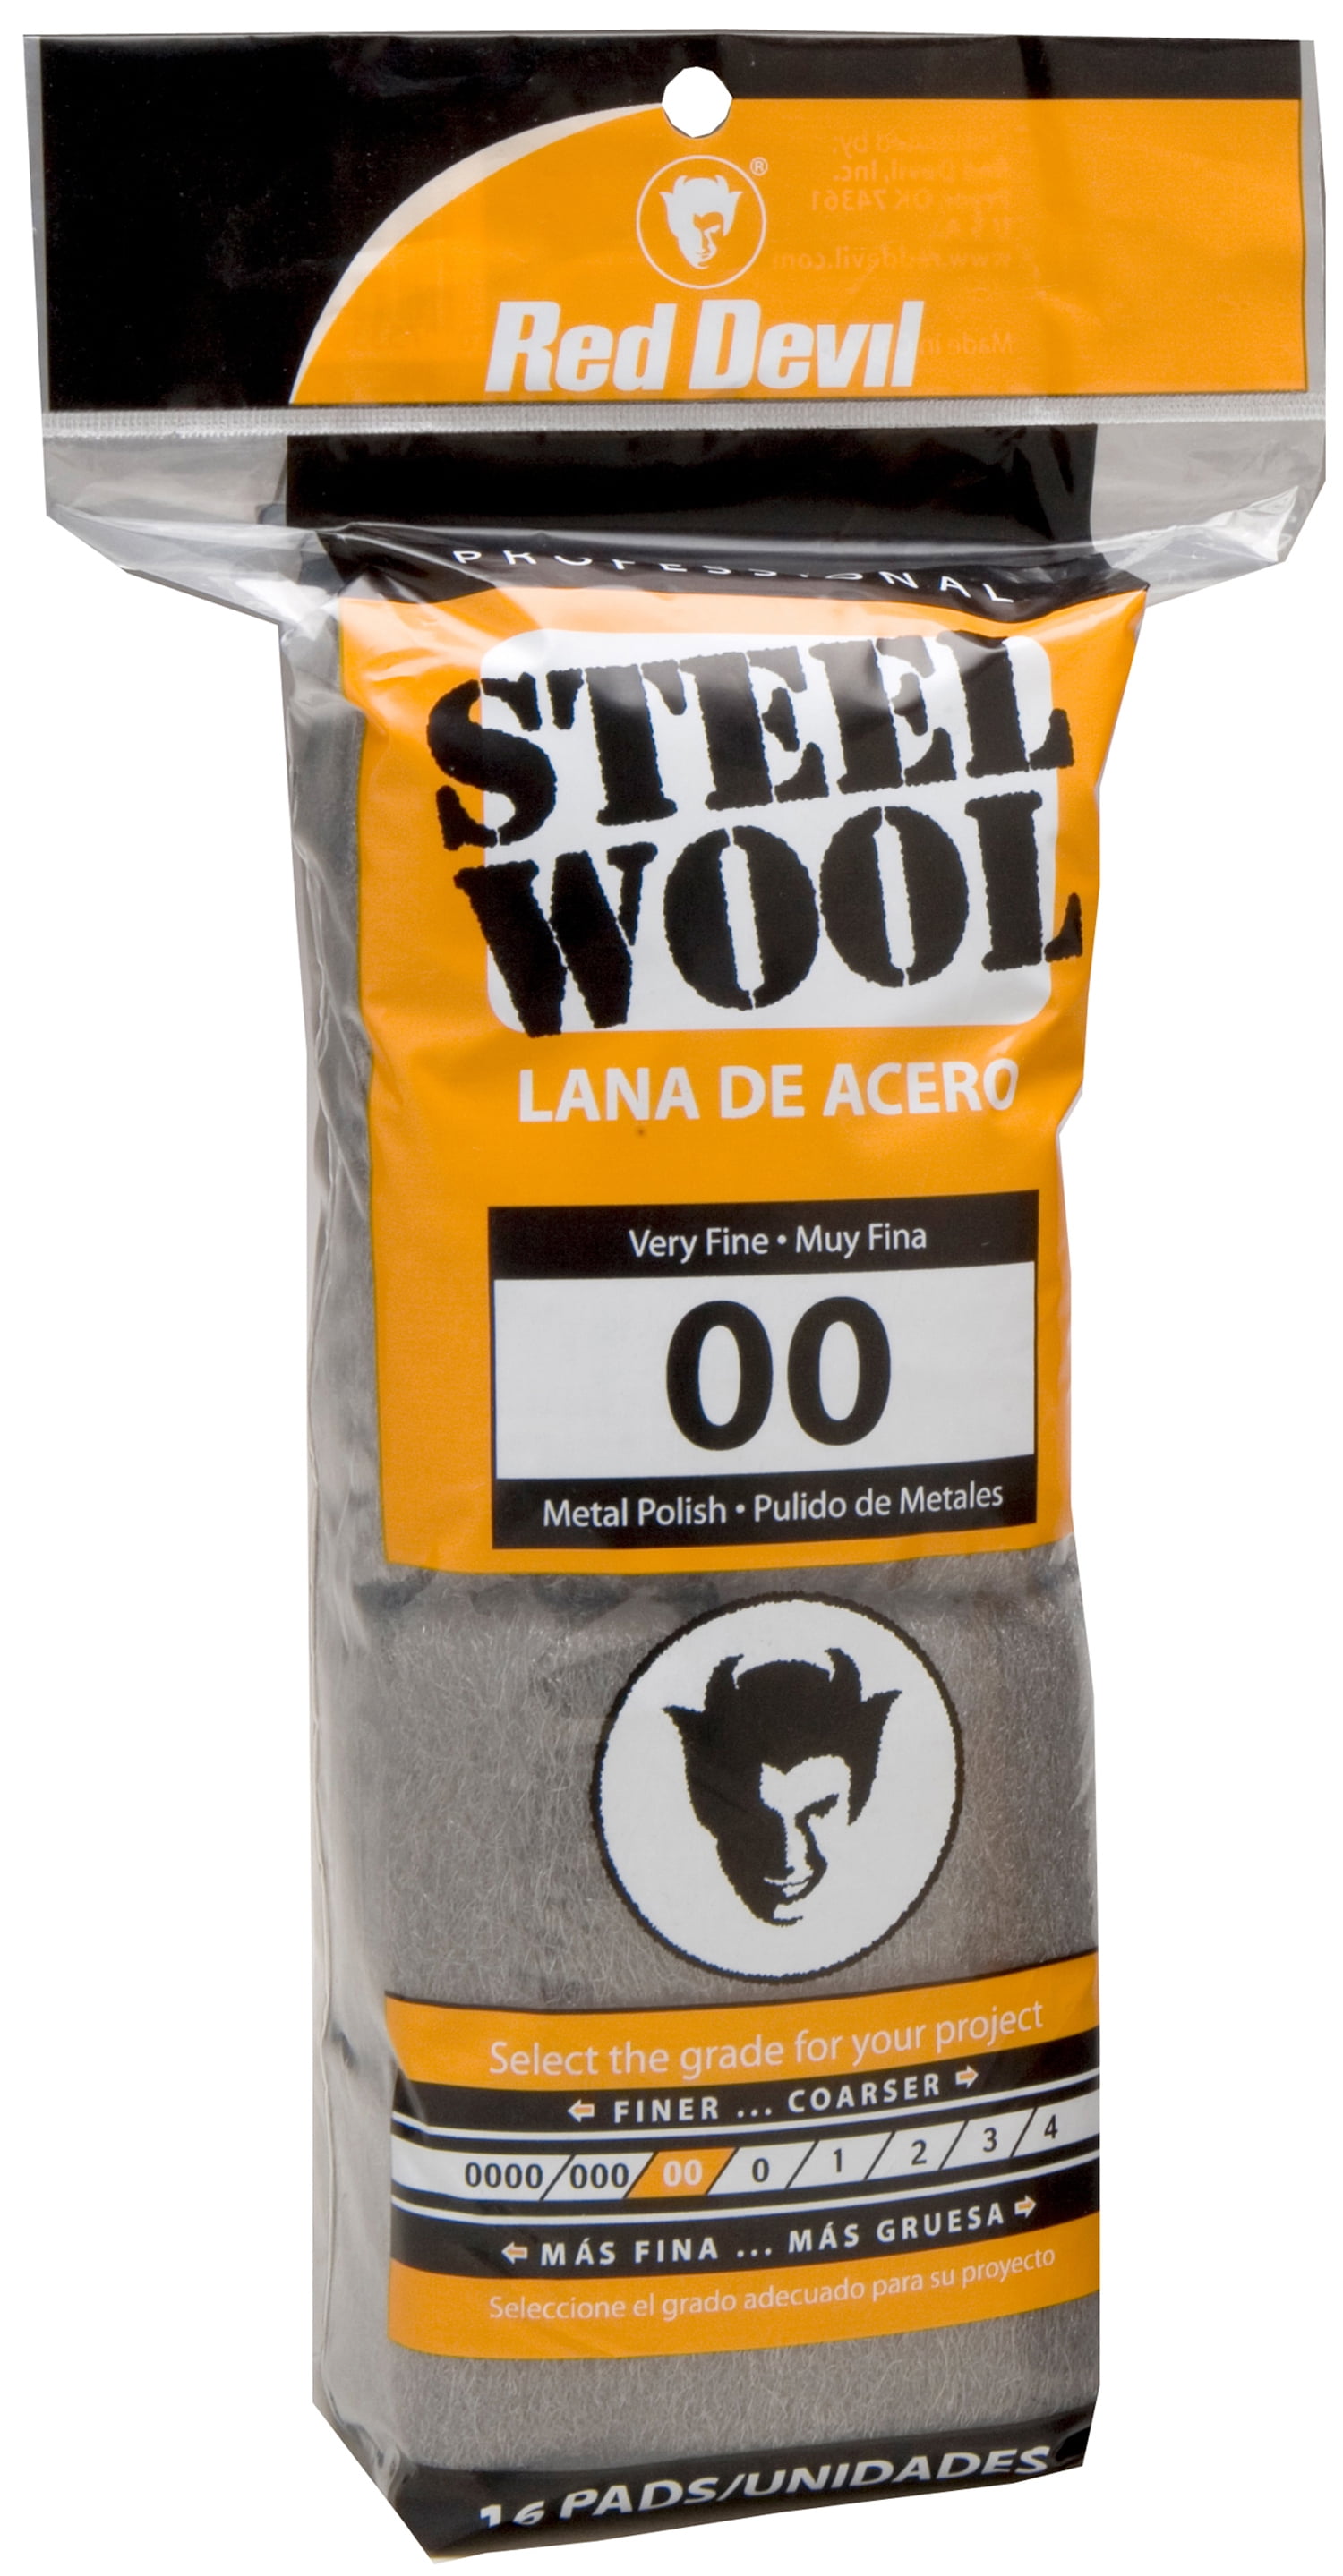 20 Lustersheen steel wool 9"x11" sanding sheets~cut to size for fine polishing 